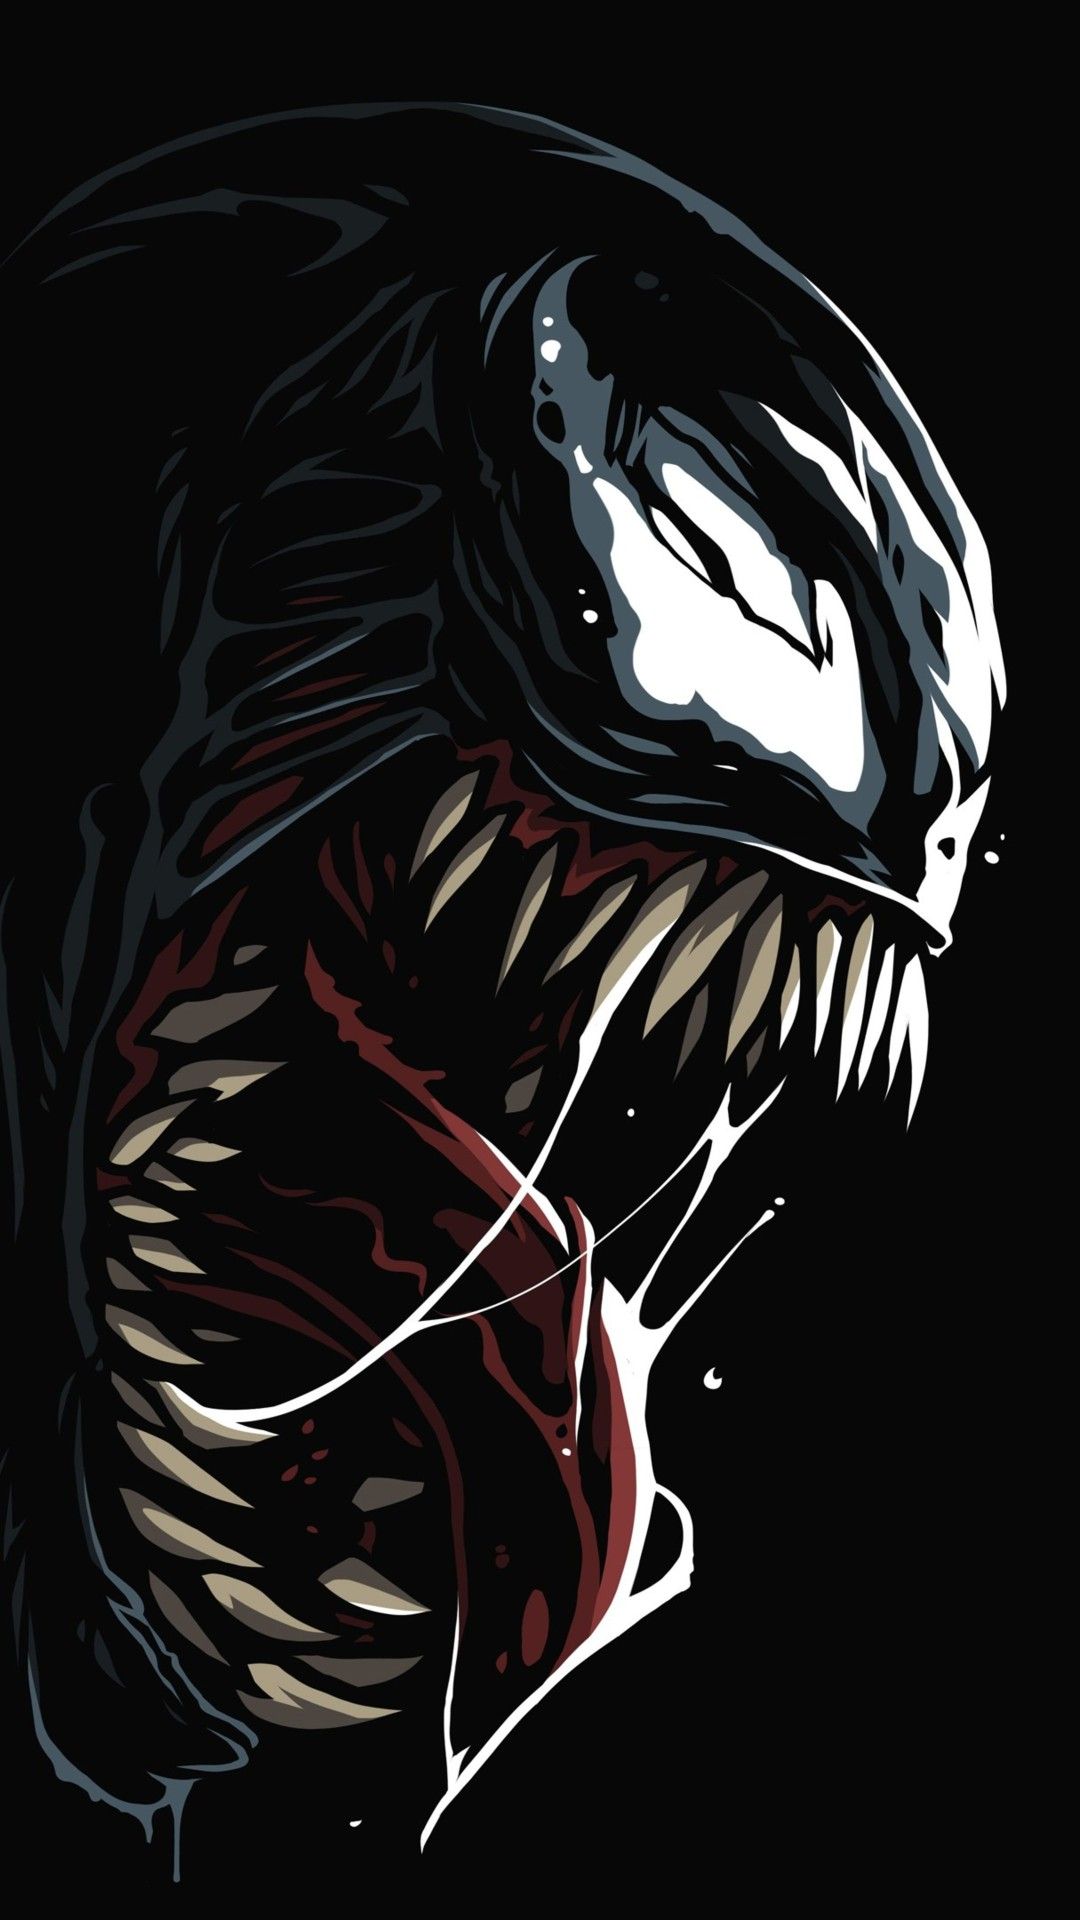 Venom image by Ray. HD anime wallpaper, Anime wallpaper, Marvel